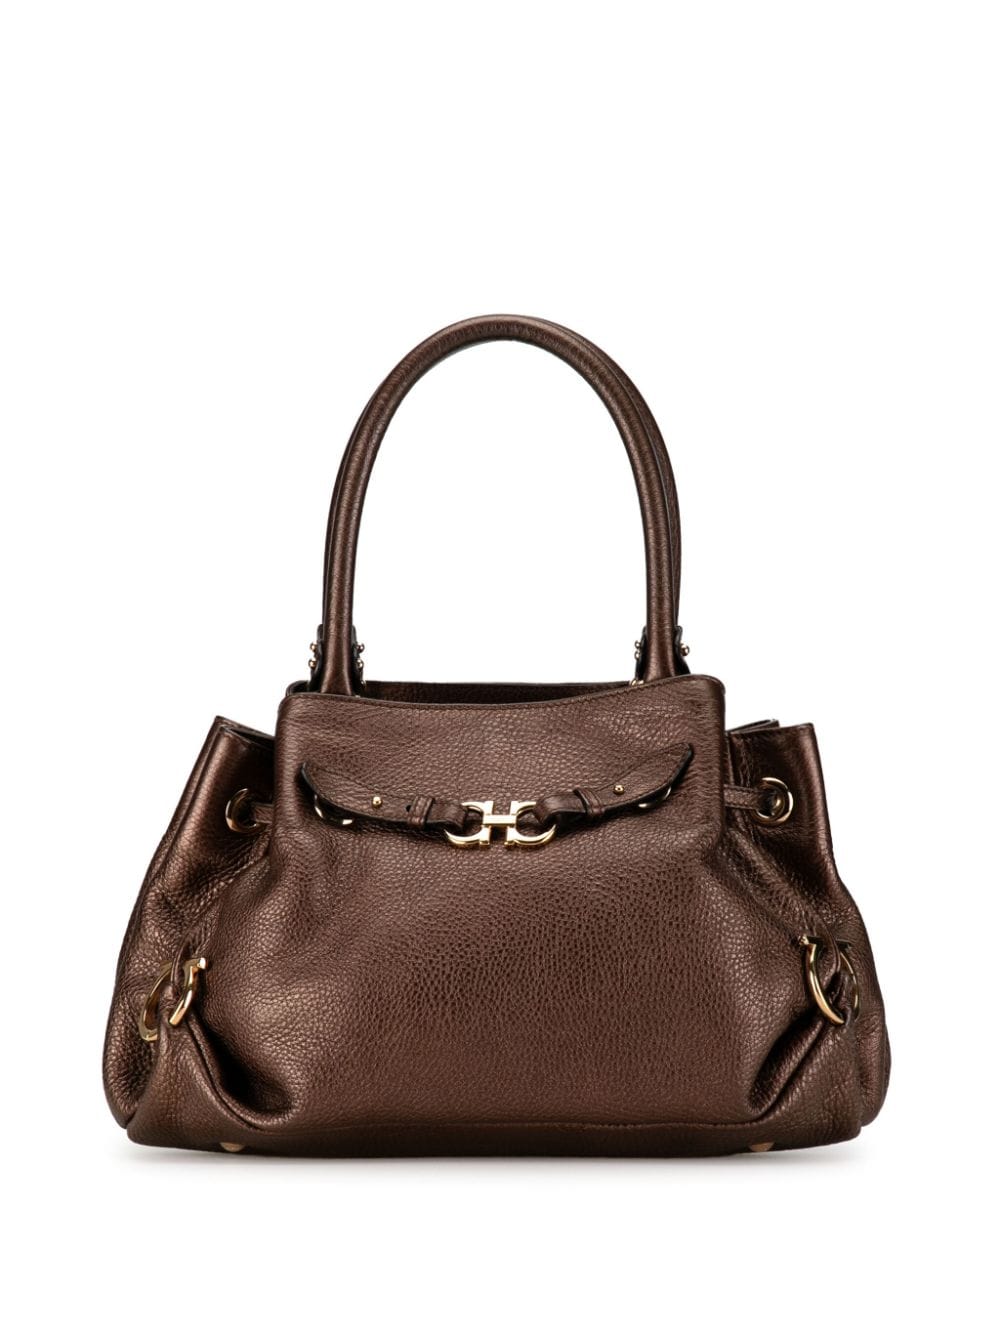 Ferragamo Pre-Owned 2000-2010 Leather Gancini handbag - Marrone